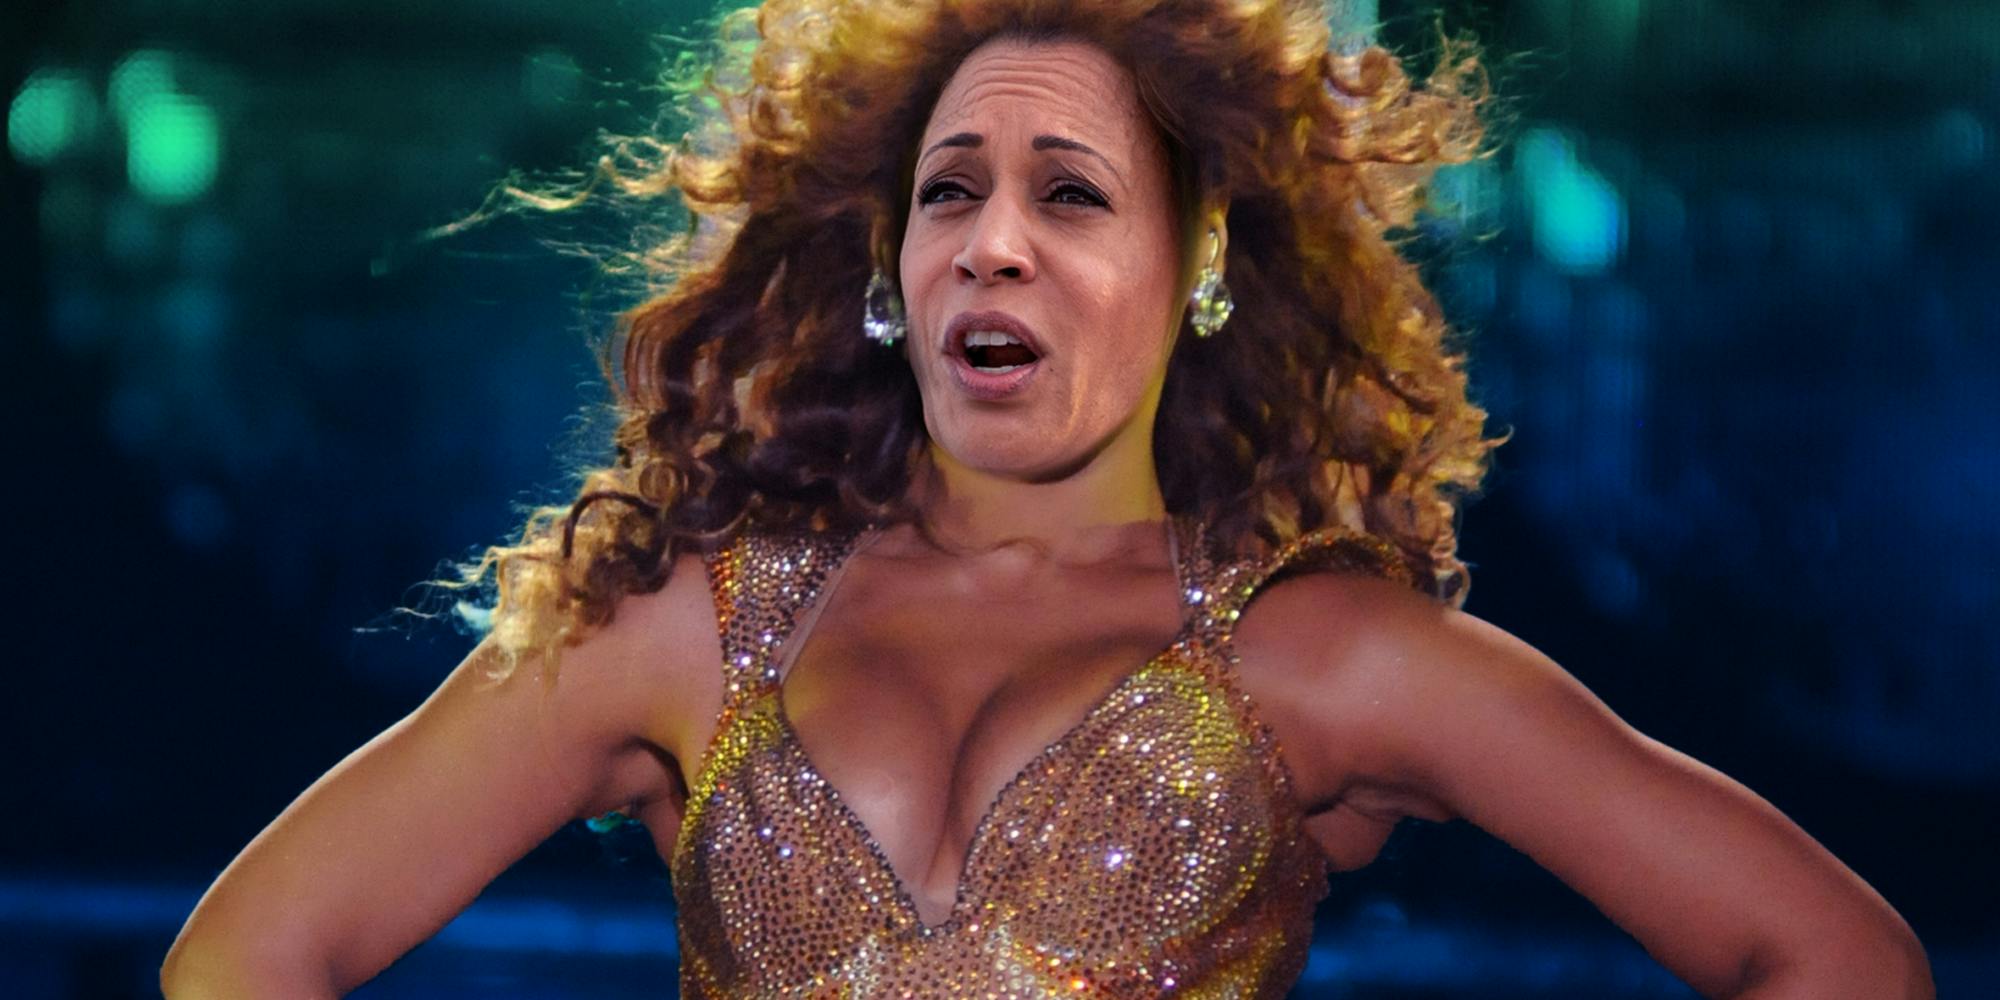 Kamala Harris face singing on Beyonce's body